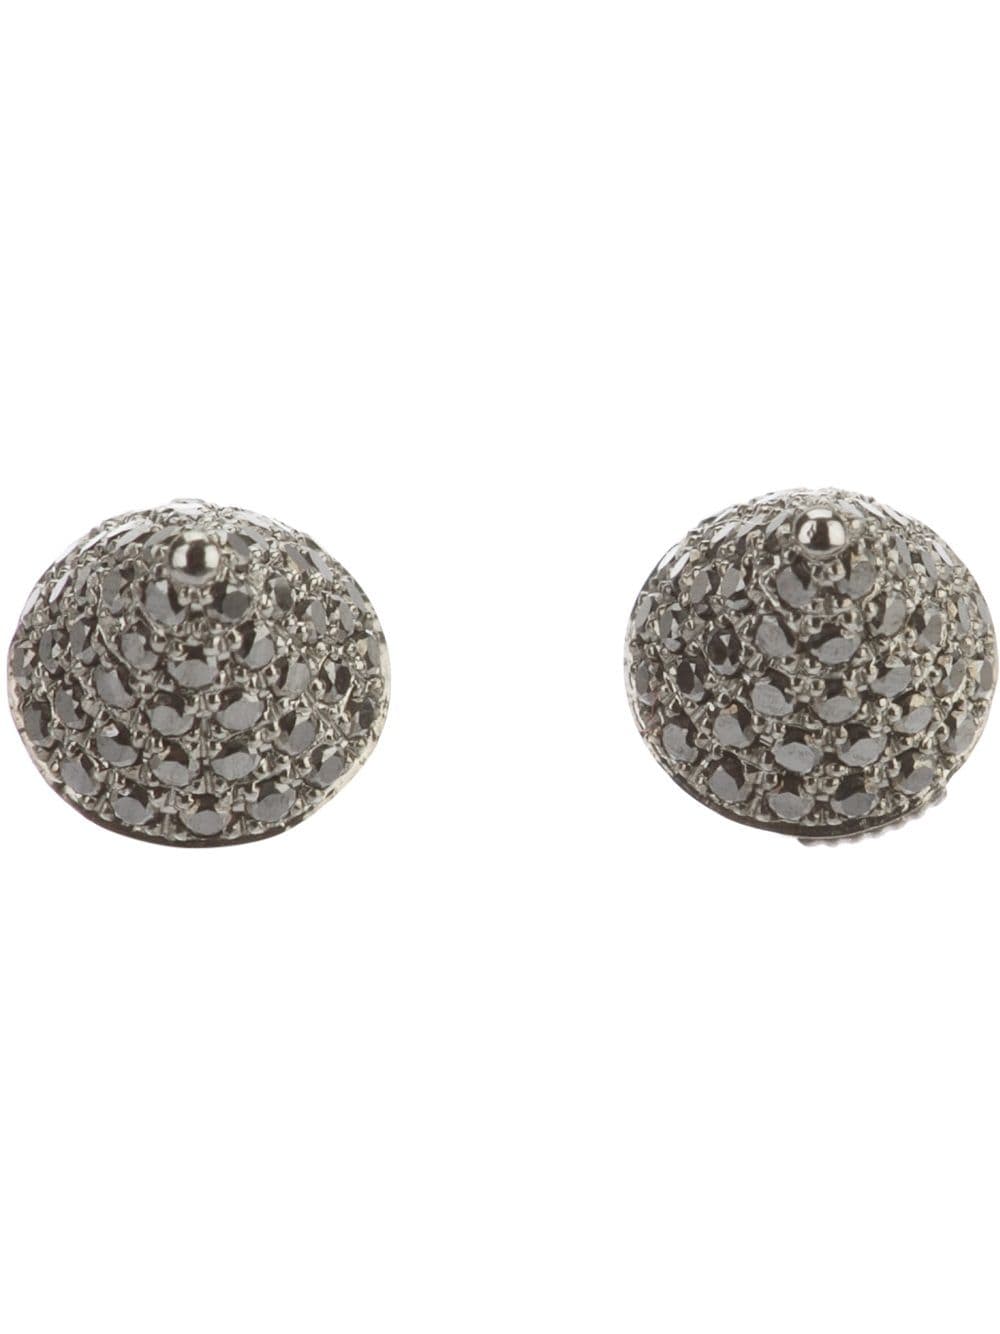 diamond 'Mini Muse' earrings